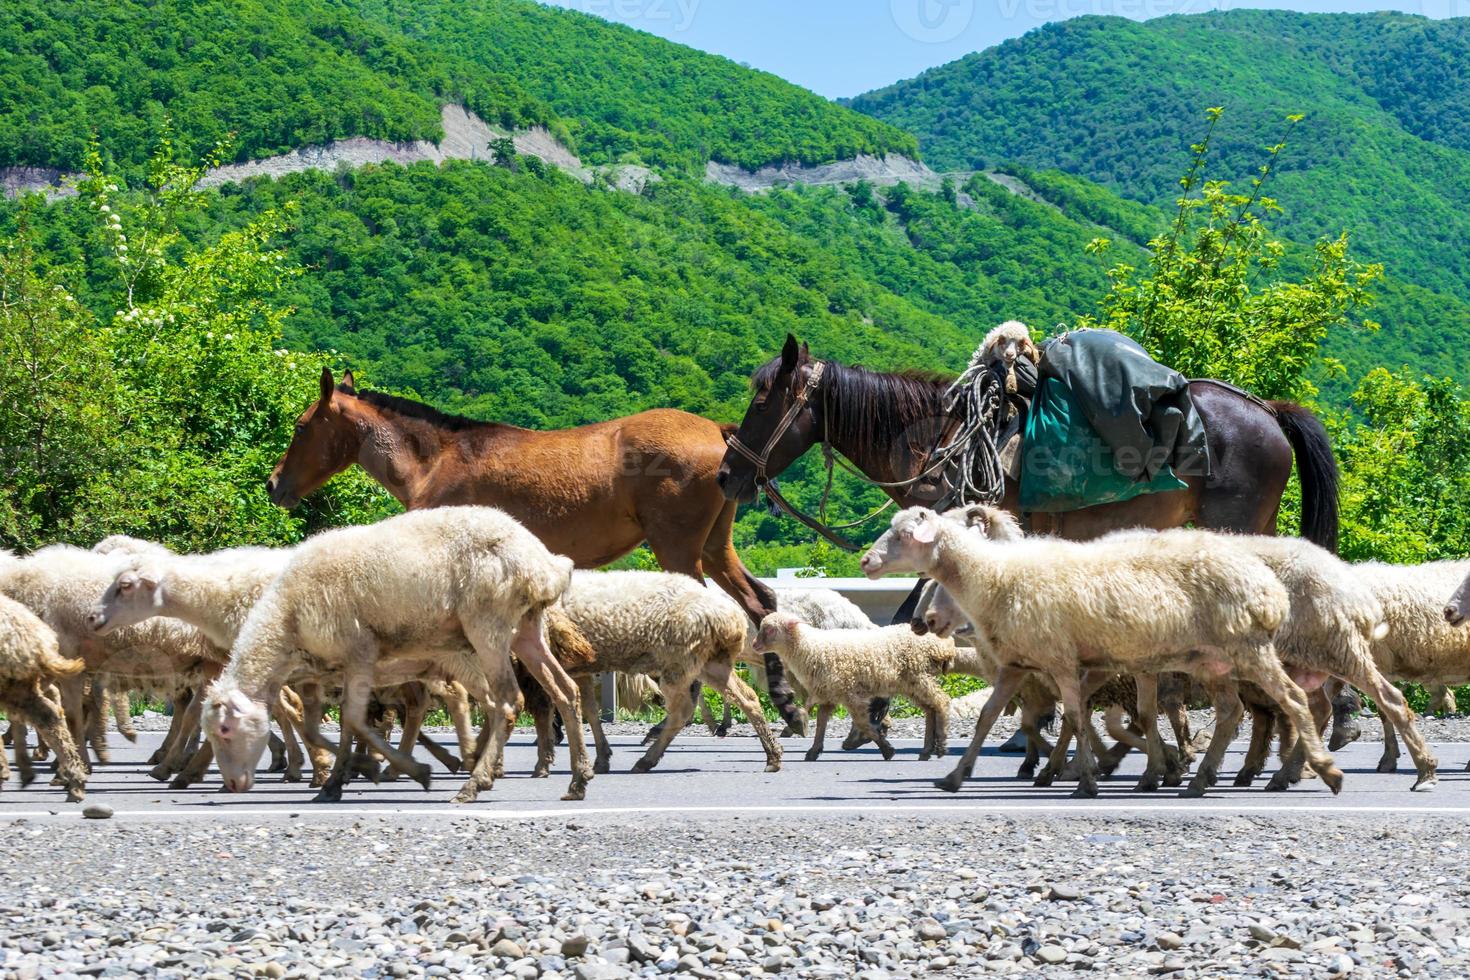 animals on road photo